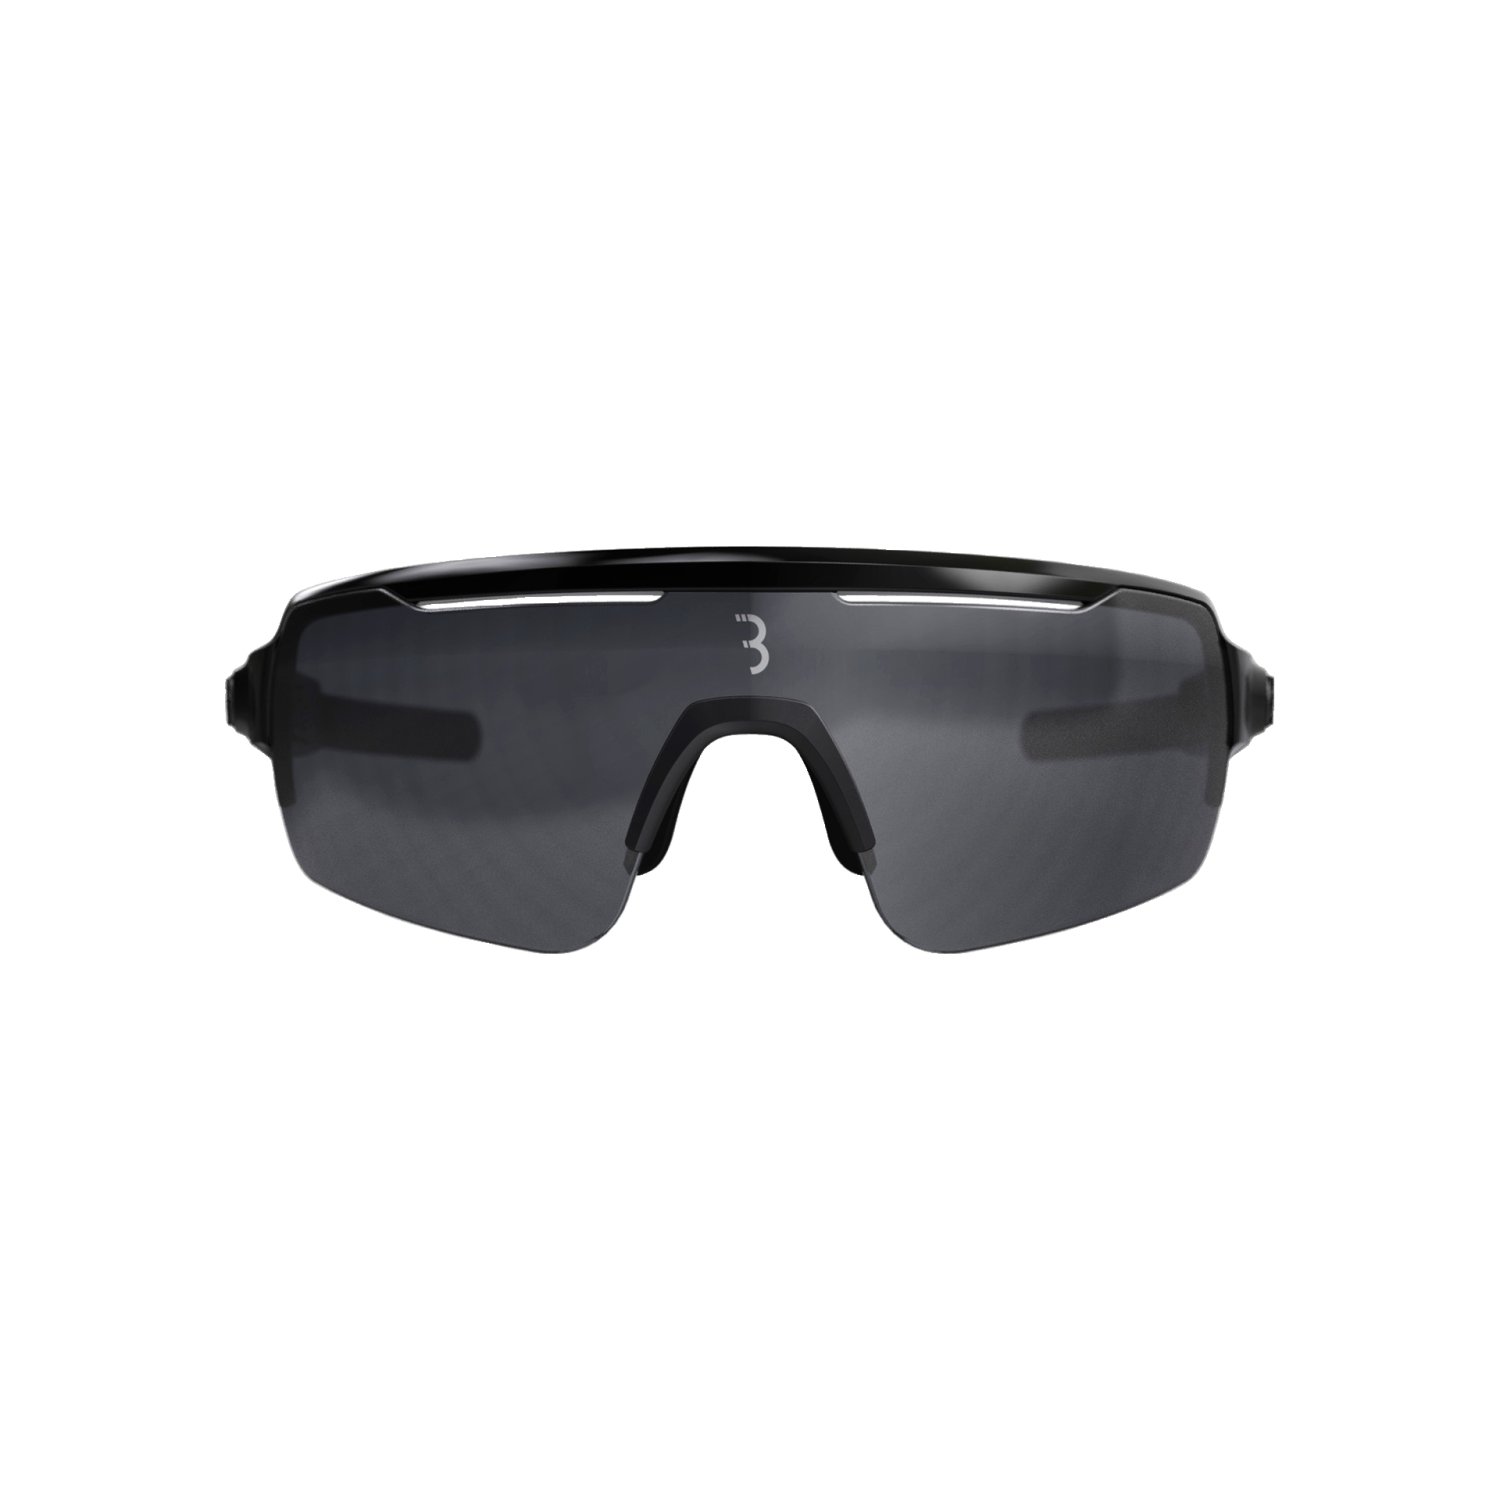 Очки велосипедные BBB 2019 sunglasses Commander PC Smoke MLC silver lens PC clear, glossy black, BSG купить на ЖДБЗ.ру - фотография № 5